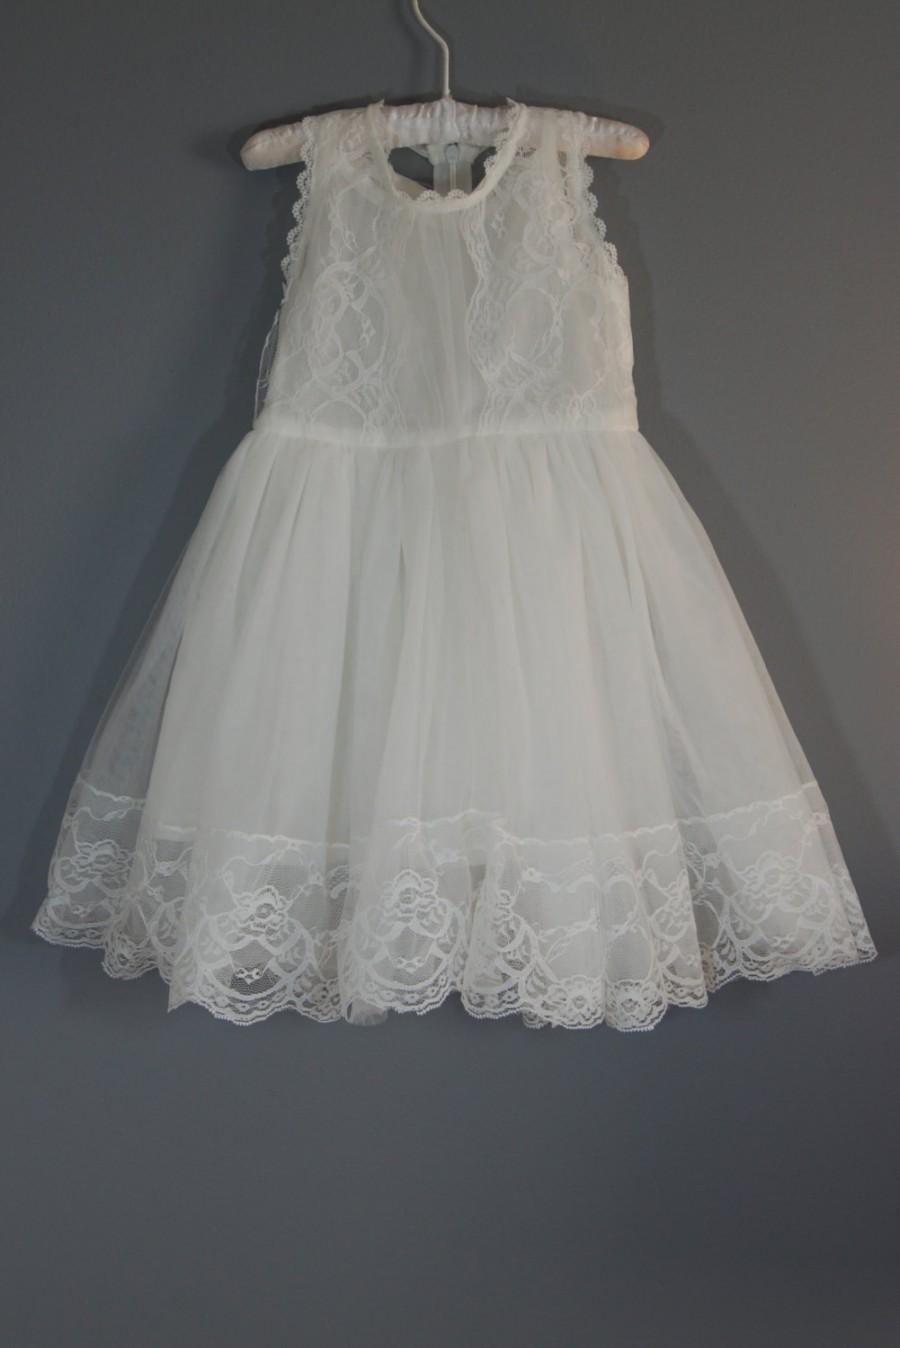 Mariage - Caroline vintage white flower girl dress,girl dress, baby dress, lace dress, vintage lace flower girl dress, lace dress, baptism dress